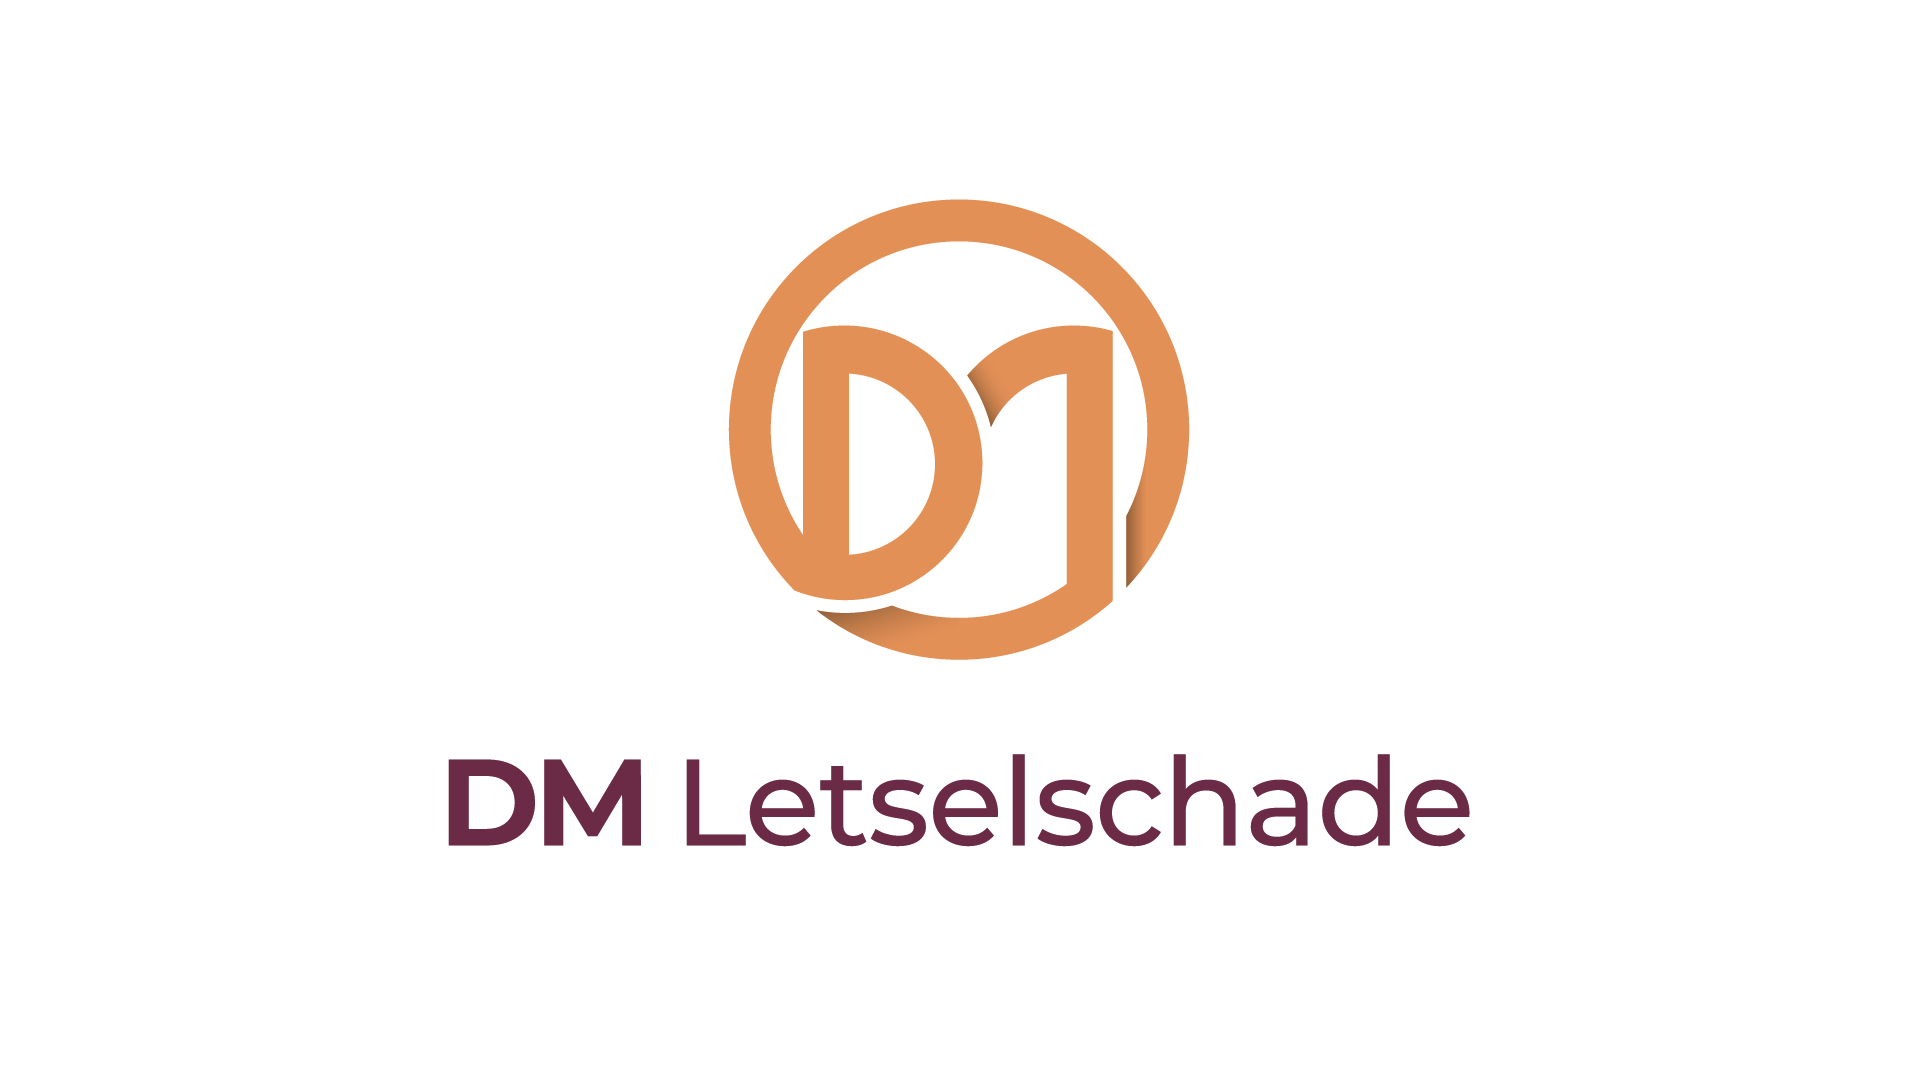 DM Letselschade logo 7